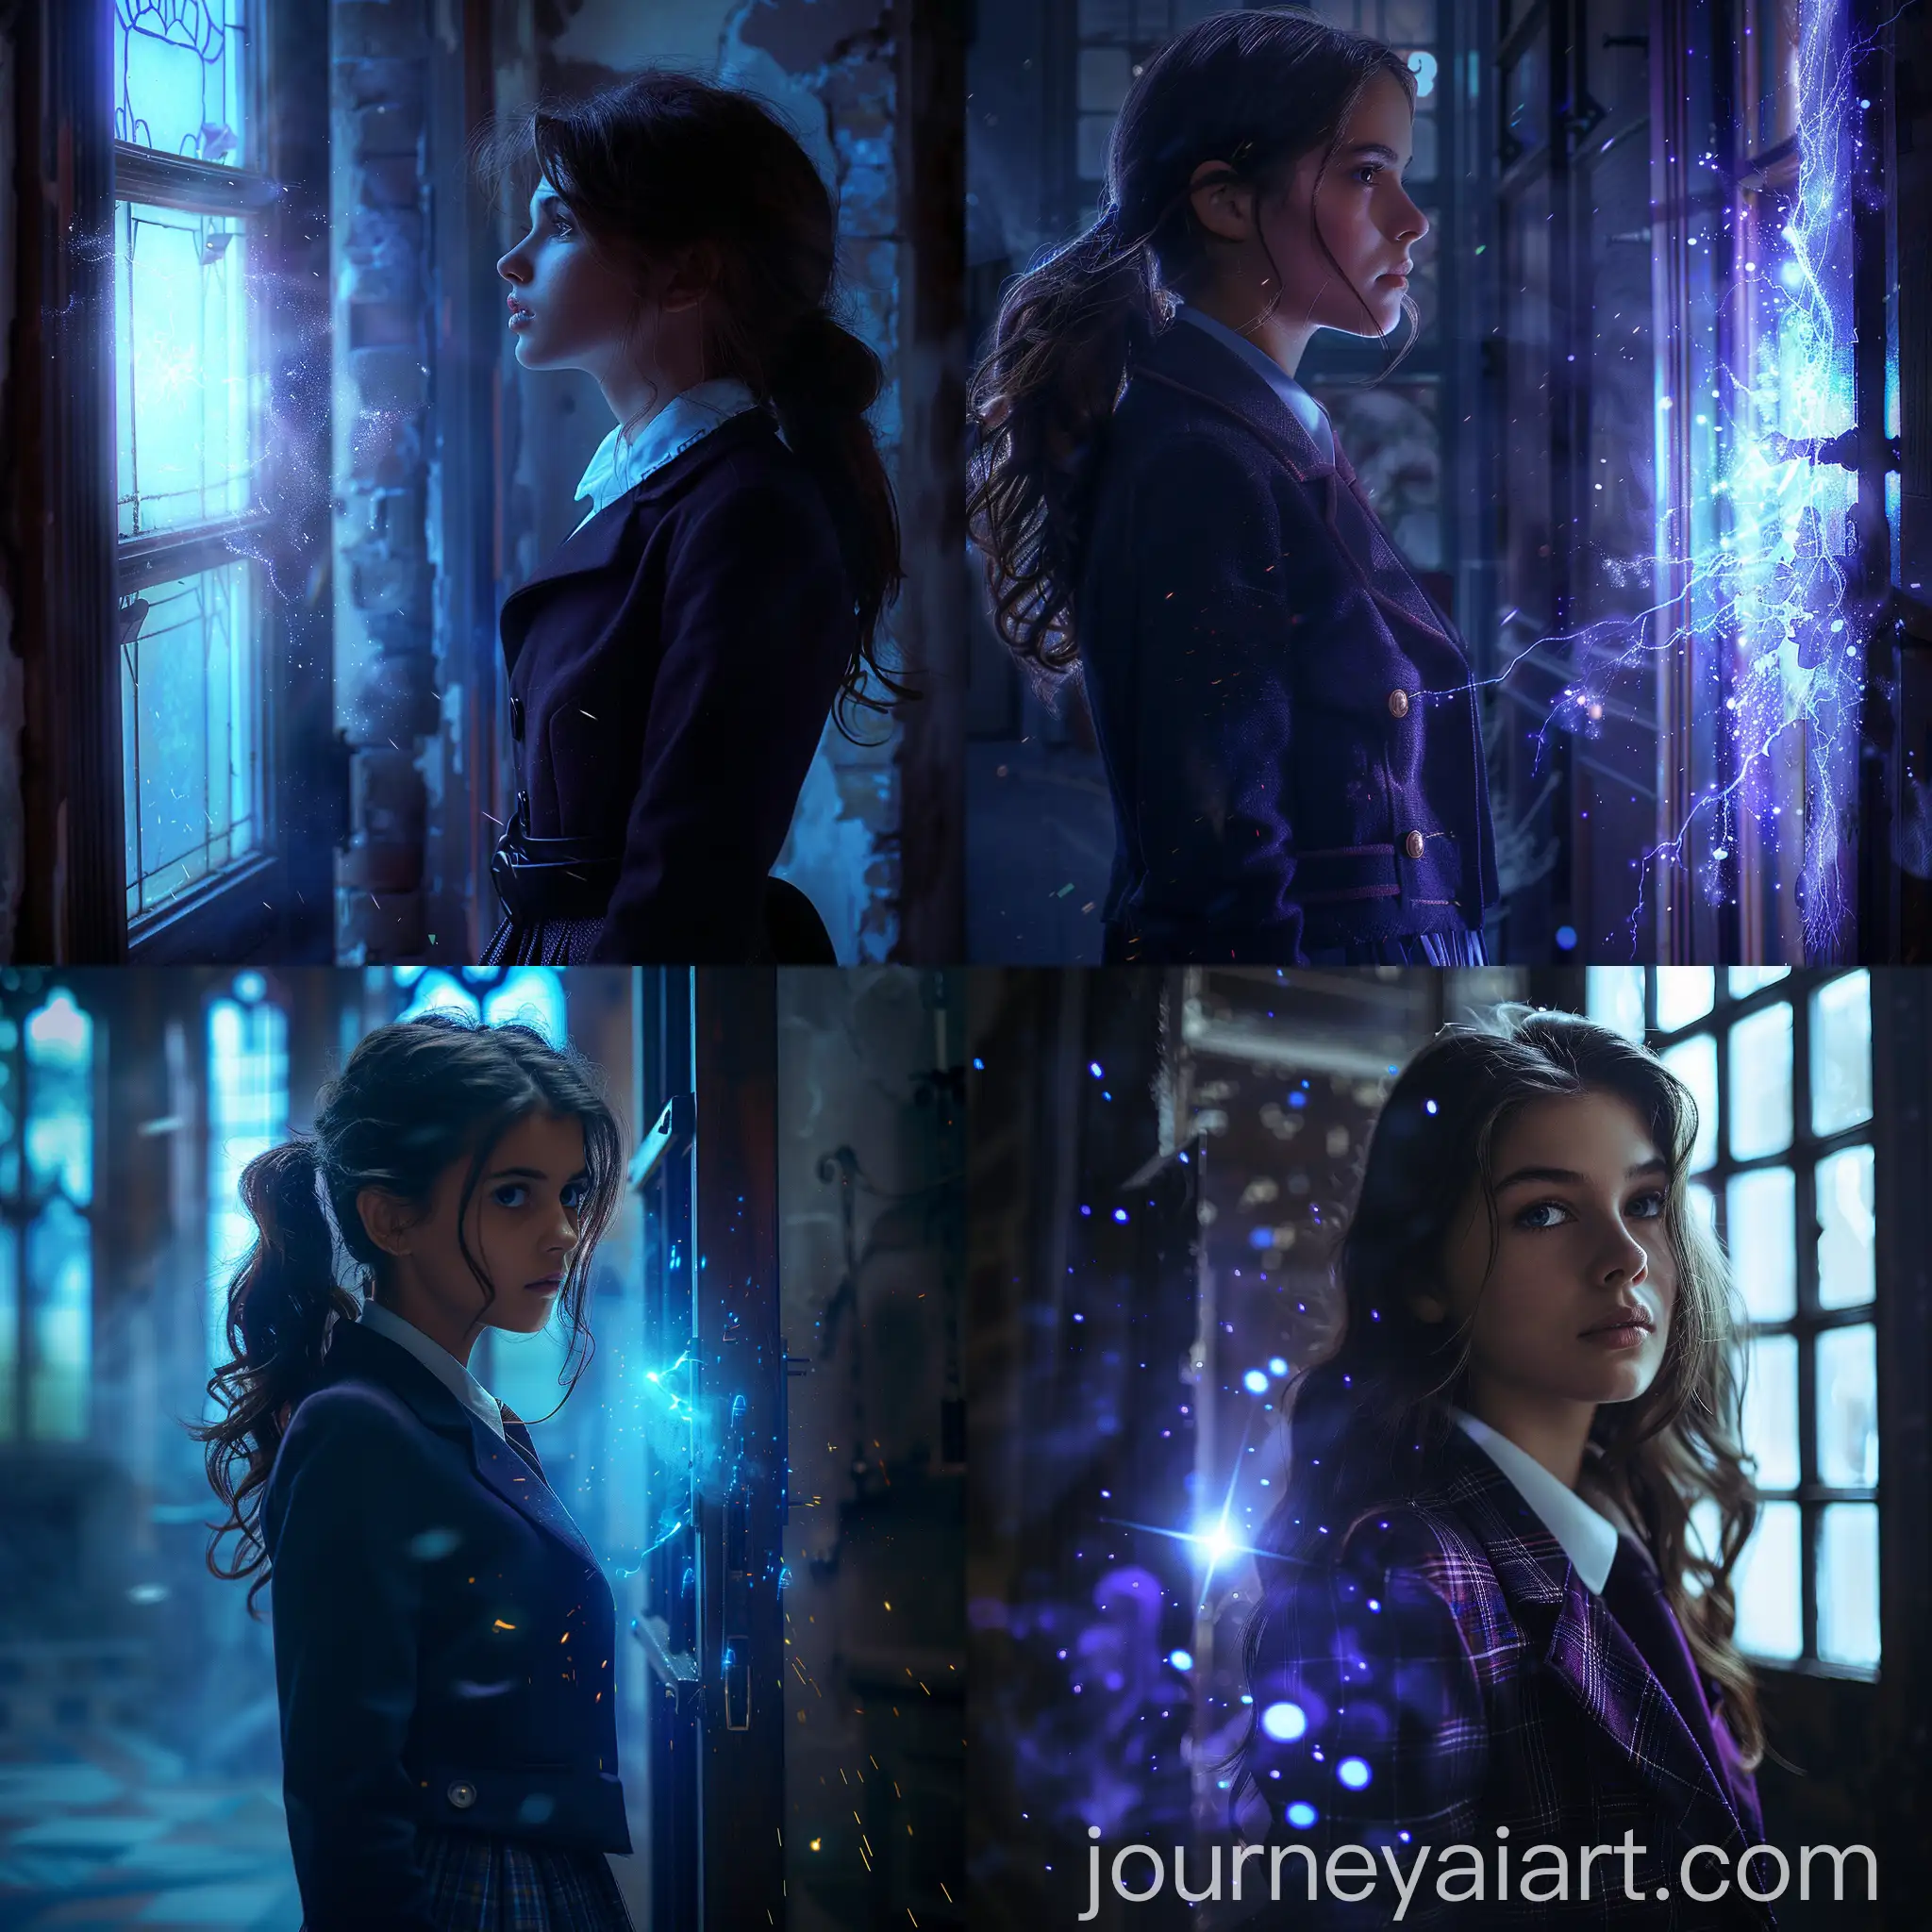 Young-Woman-in-Dark-Purple-School-Uniform-Gazing-at-a-Magical-Blue-Light-Door